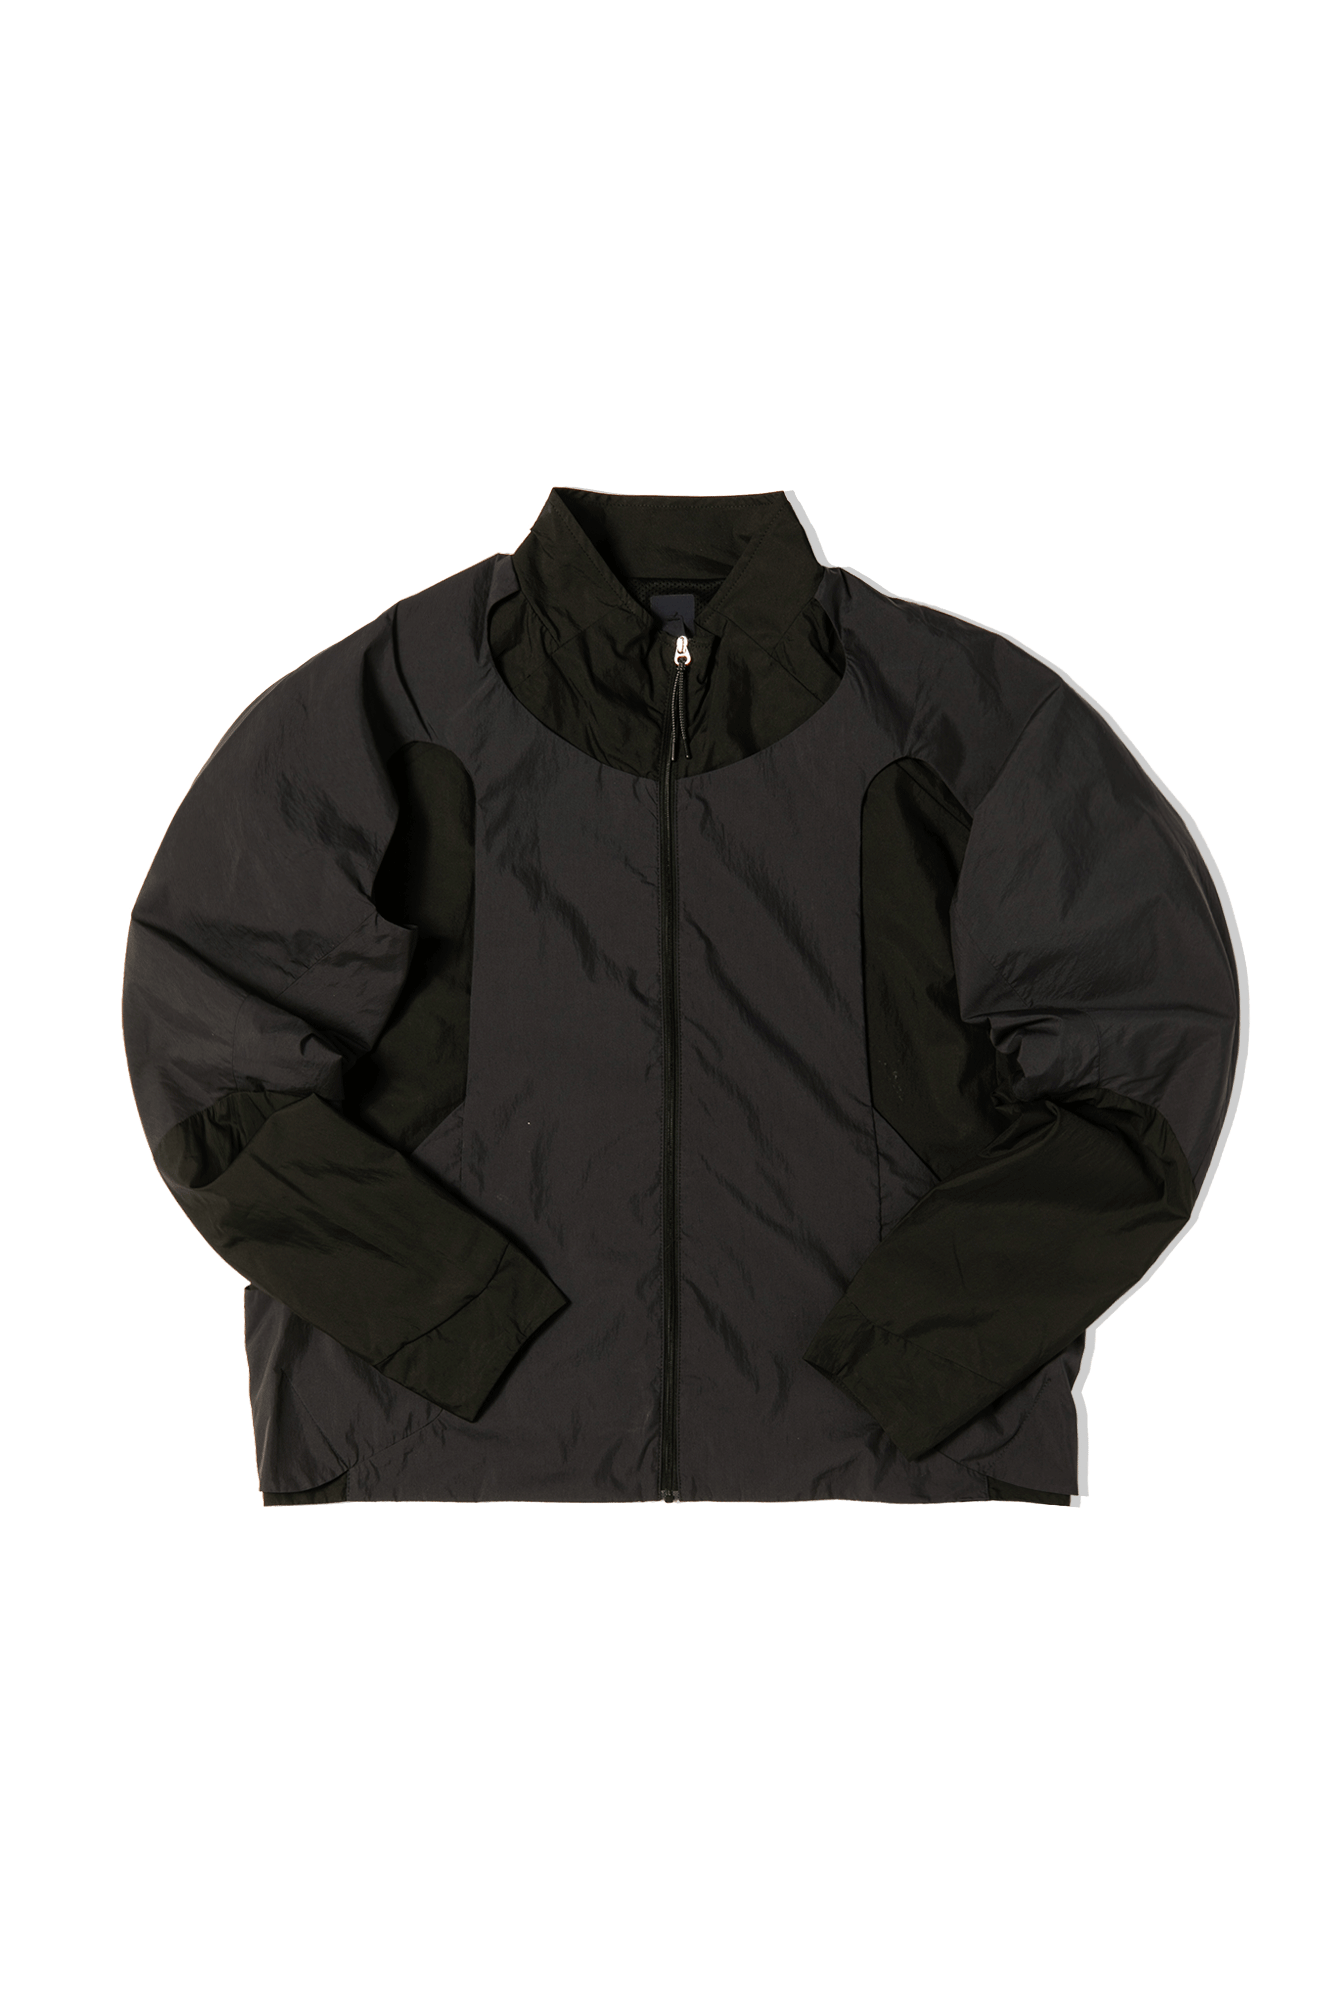 ARC'TERYX fleece jacket archive 90s 00s - アウター